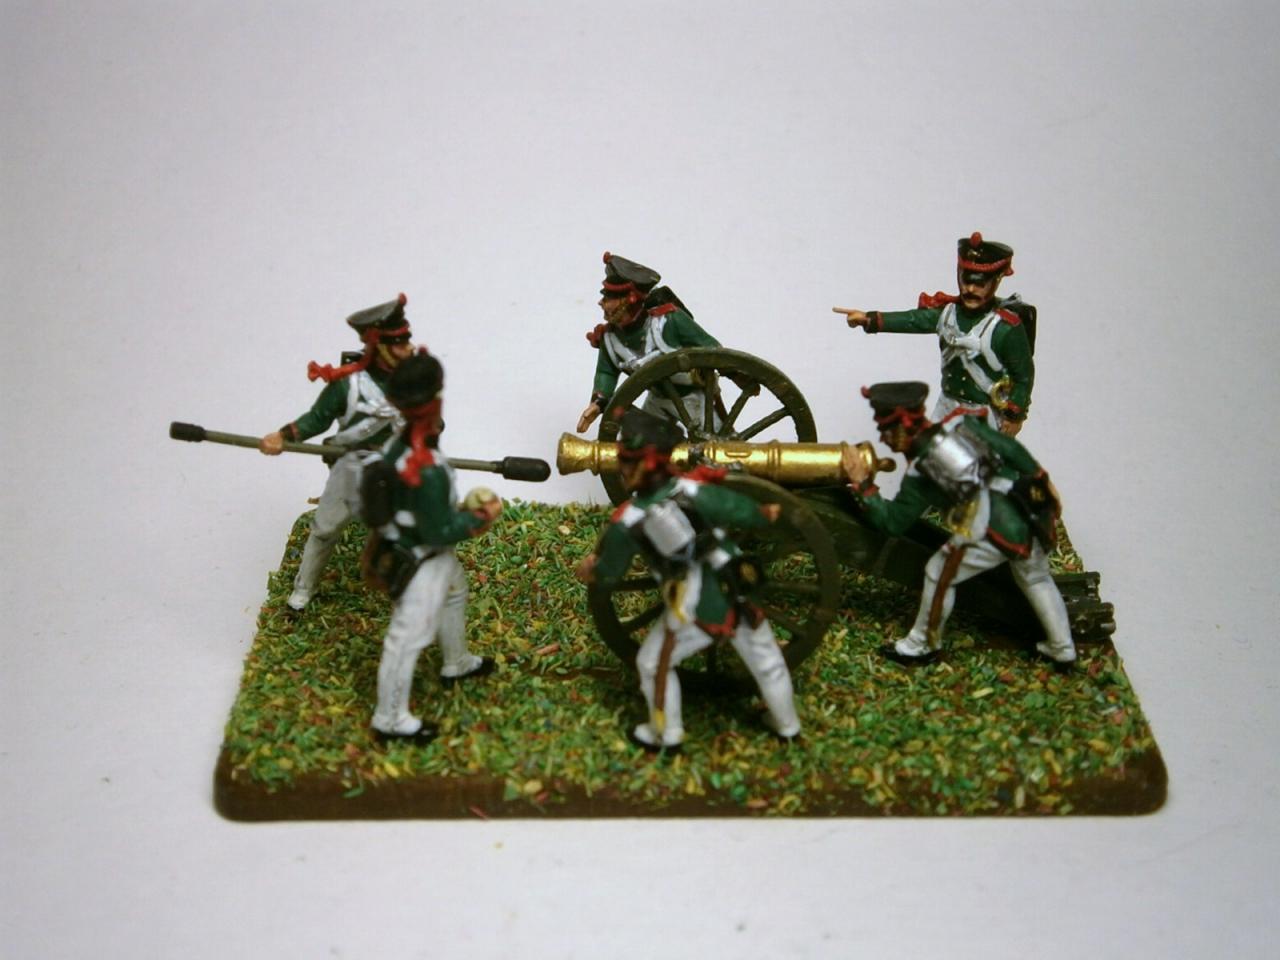 6809 - Russian Foot Artillery (Napoleonic Wars) 1/72